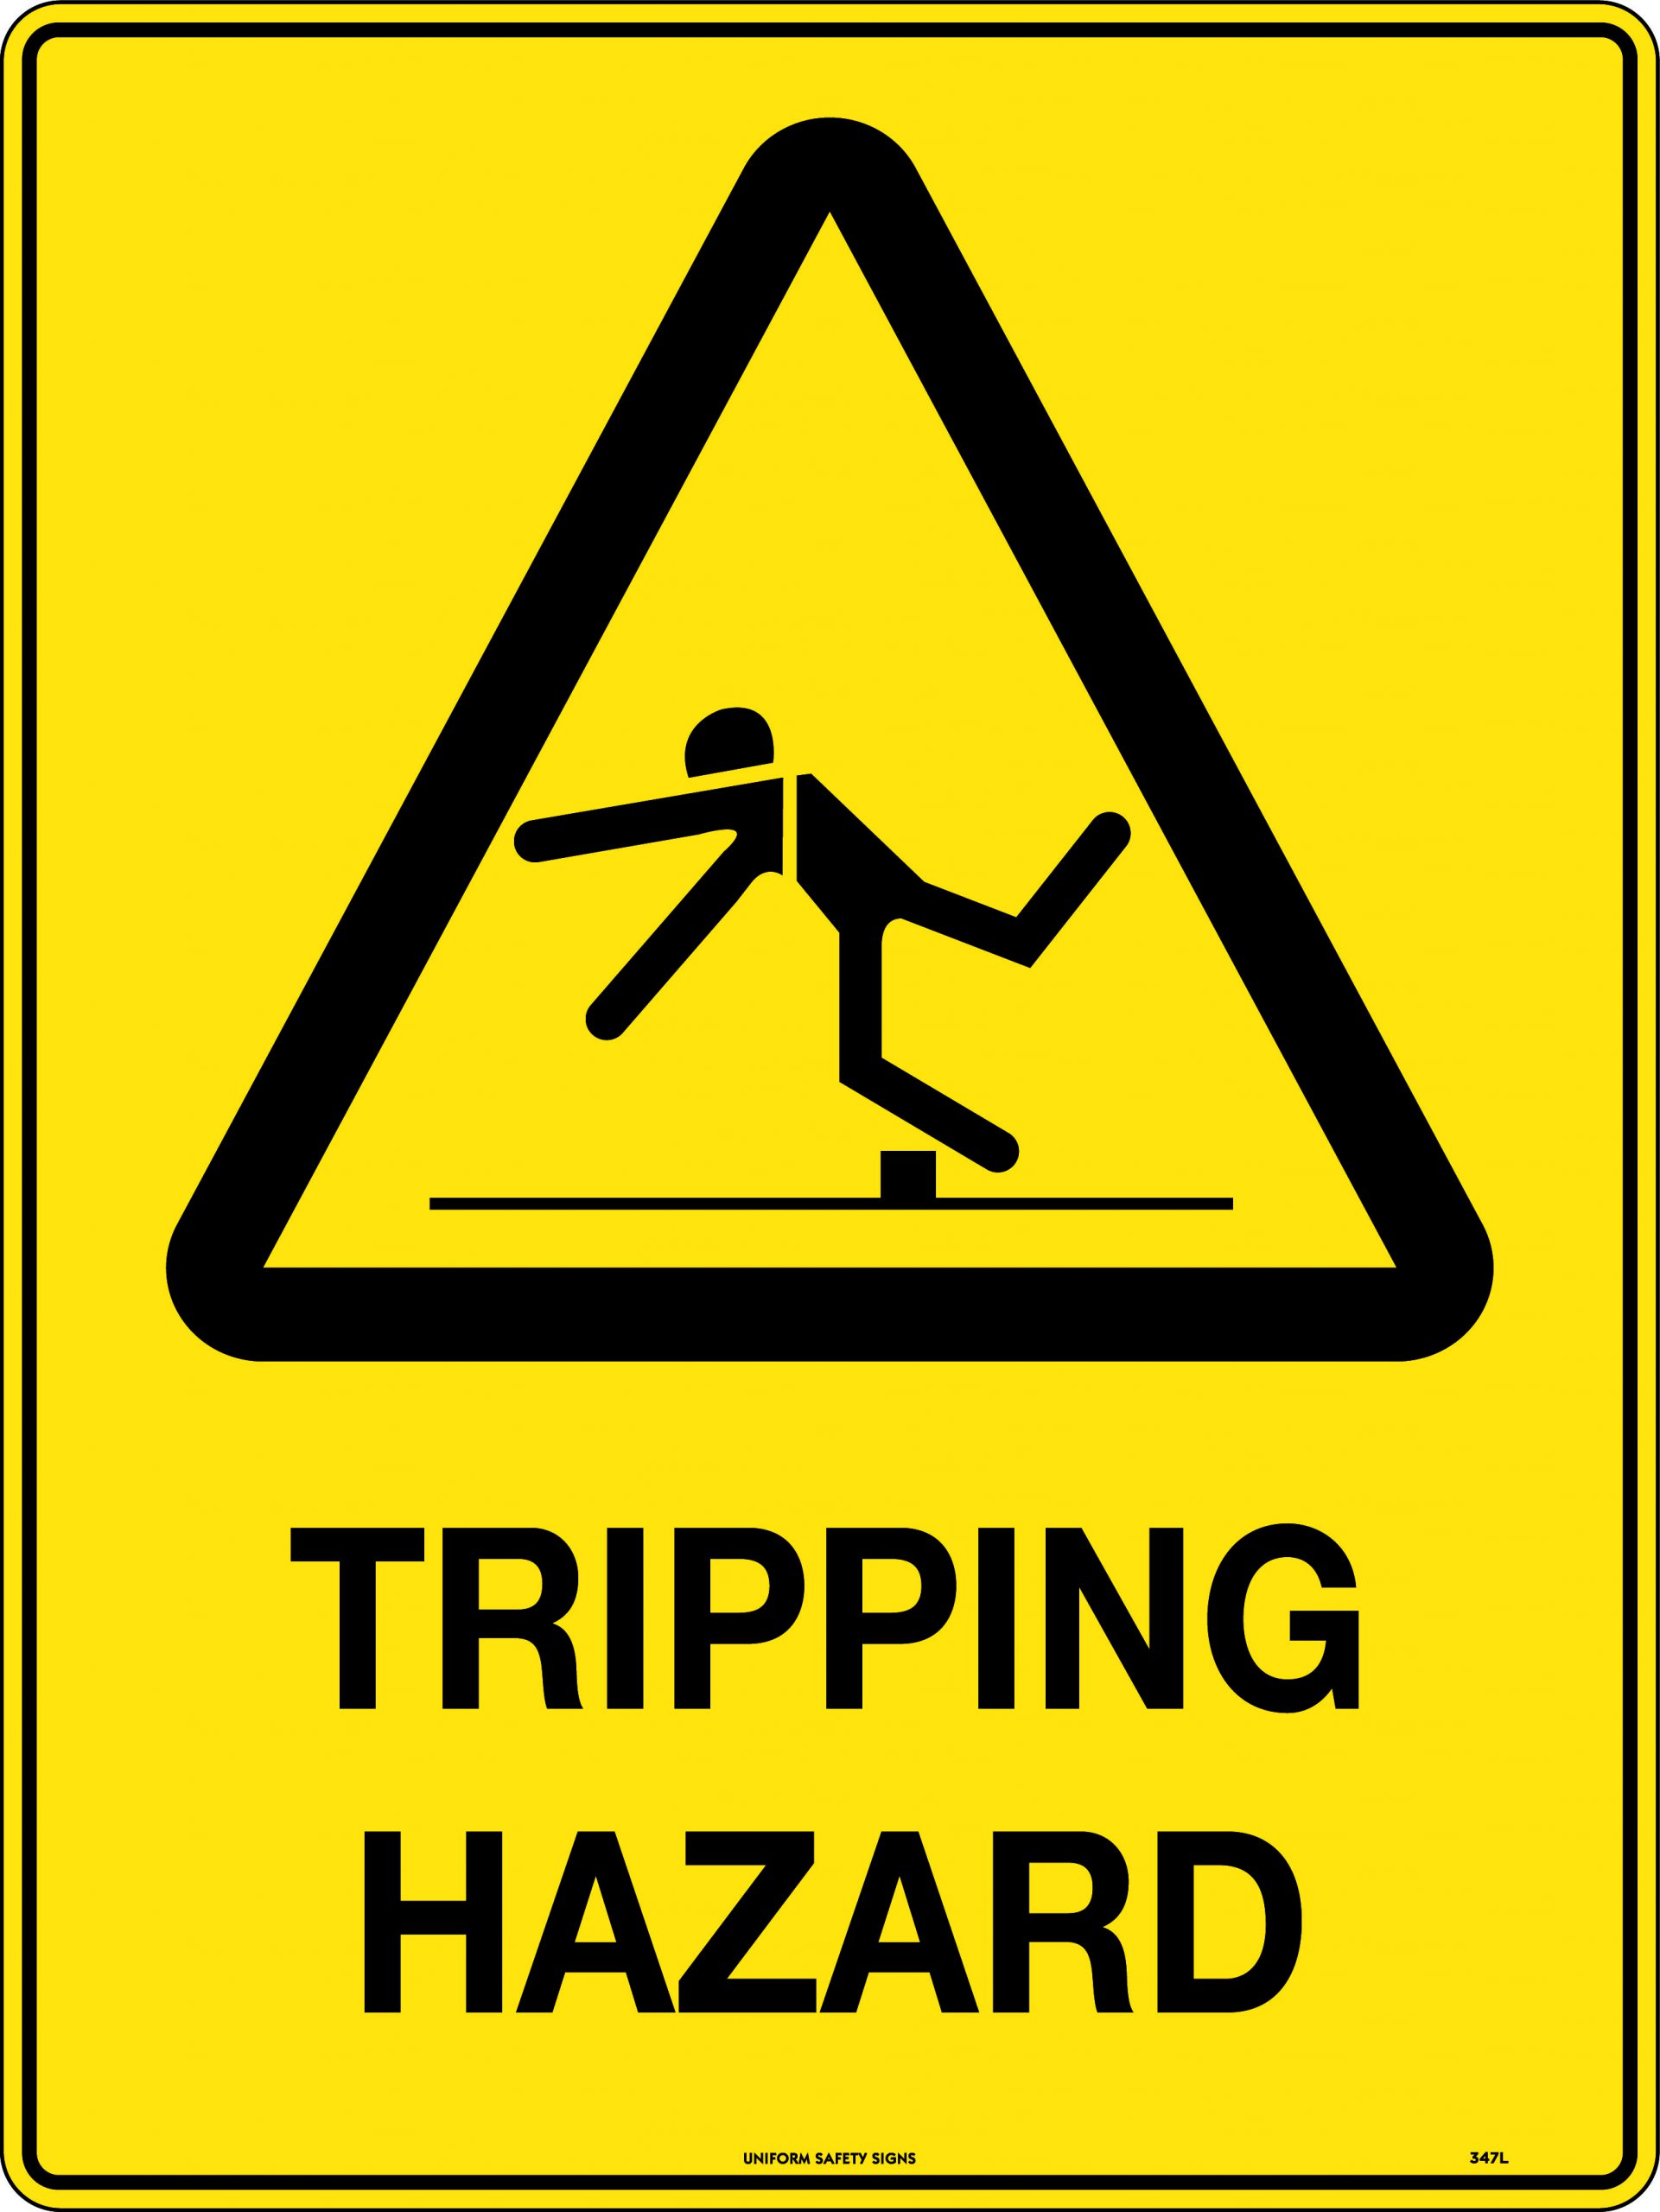 trip hazard images